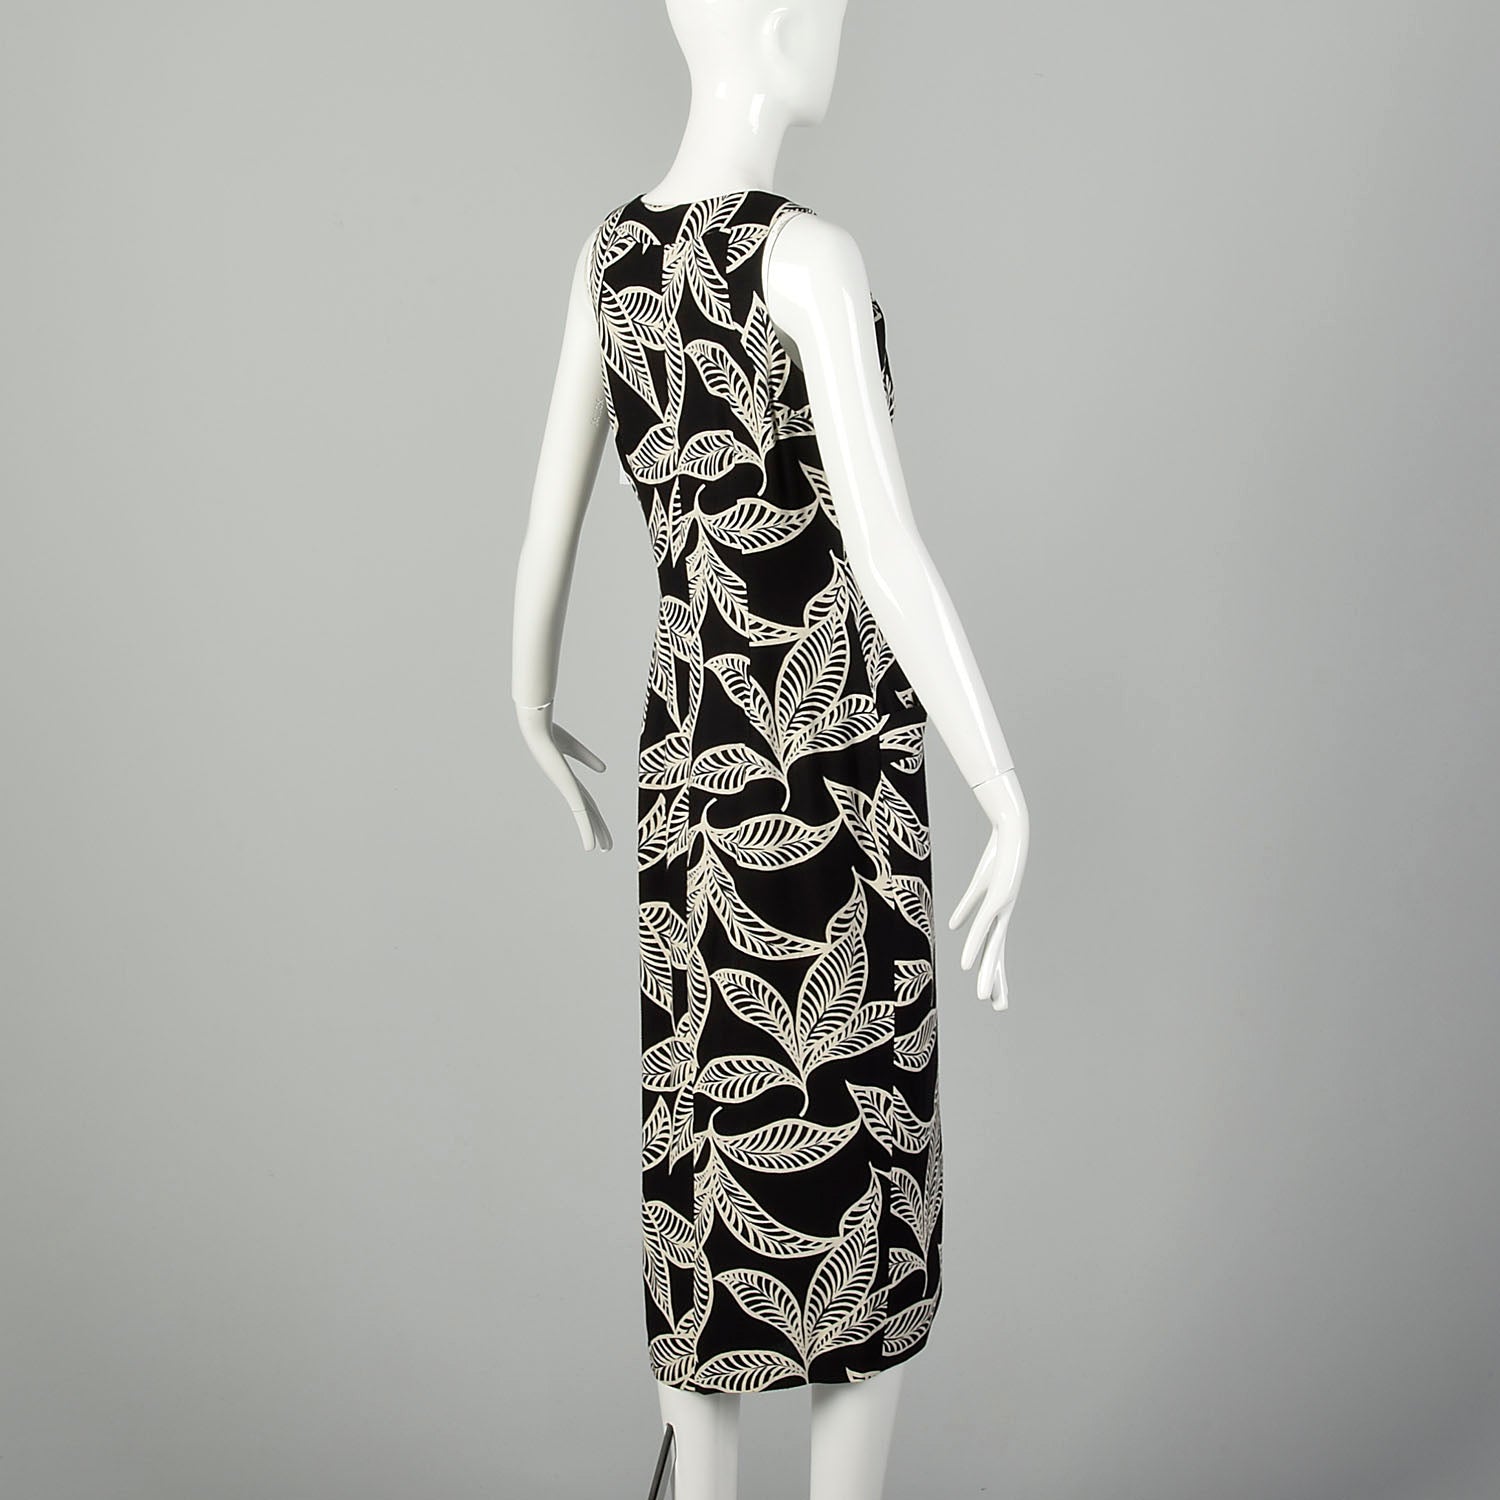 Medium 1990s Tropical Print Black Dress Casual Sleeveless